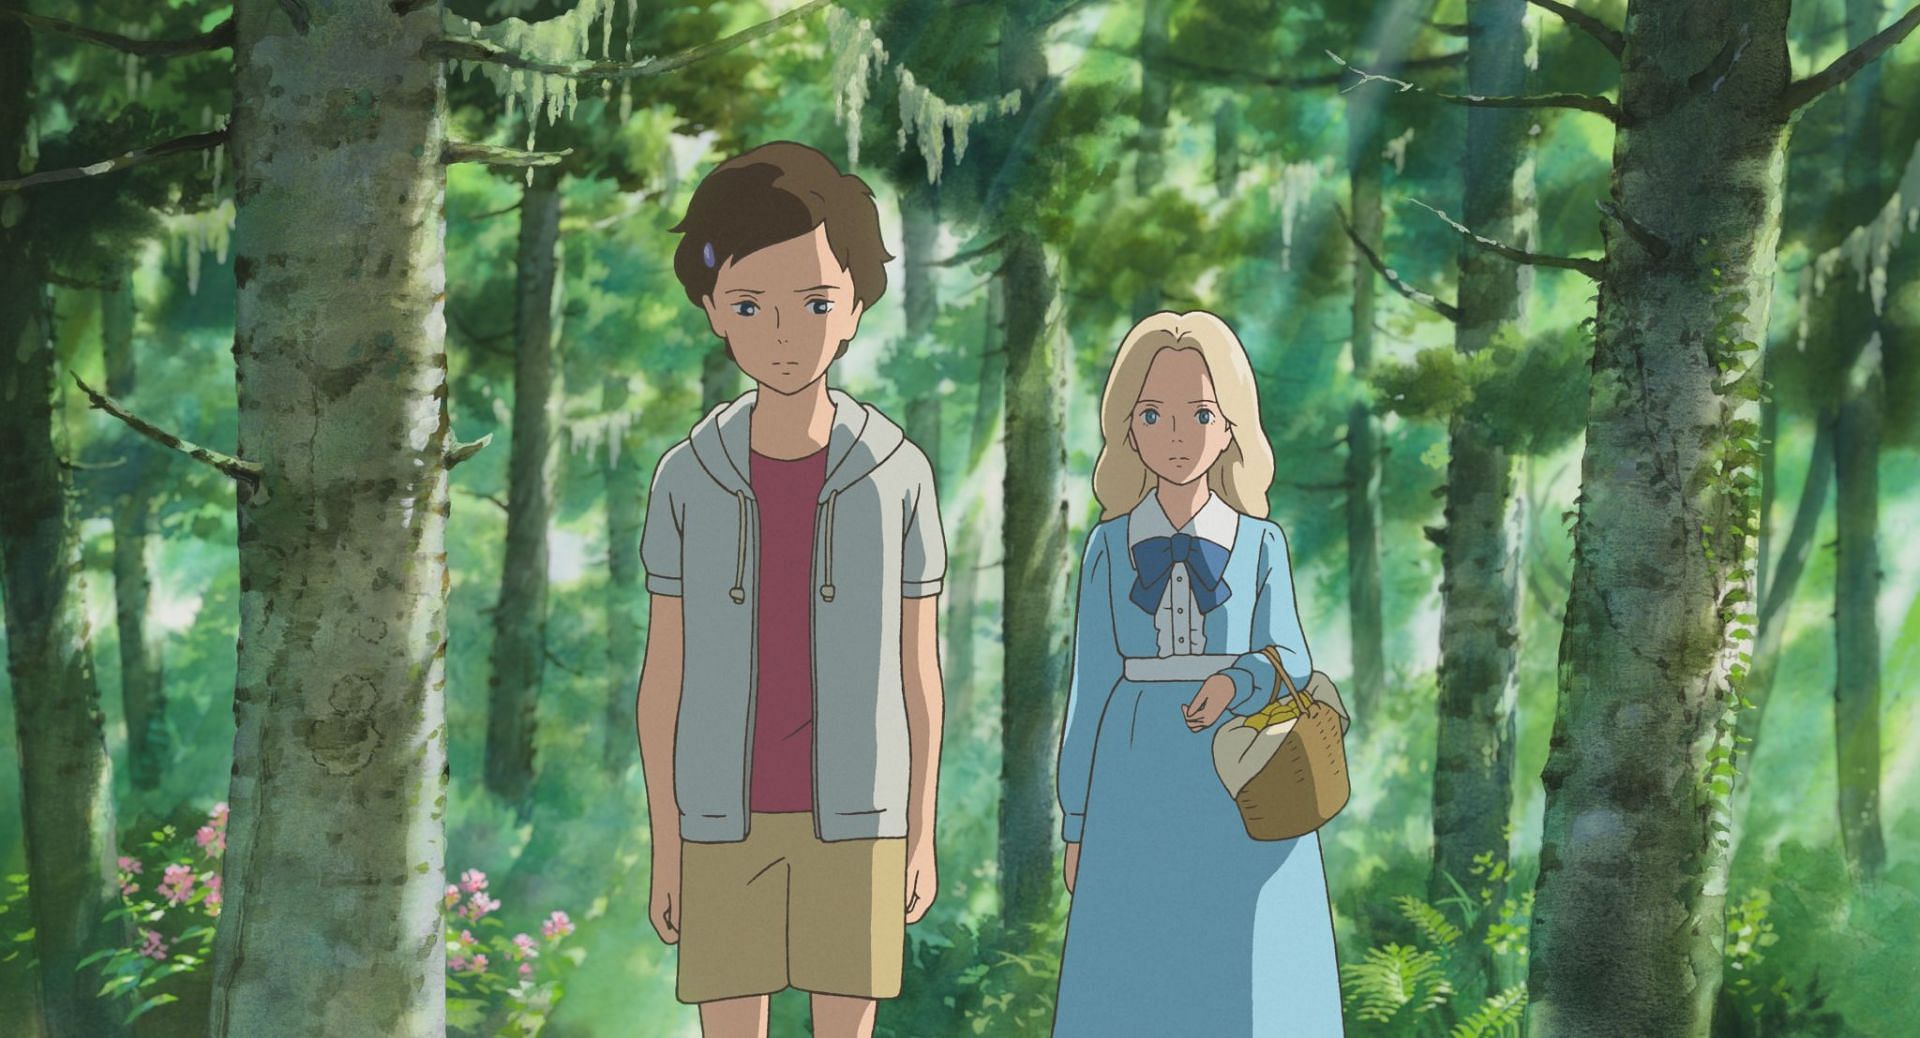 Anna and Marnie seen in When Marnie Was There (Image credits: Hiromasa Yonebayashi/ Studio Ghibli/ Toho)